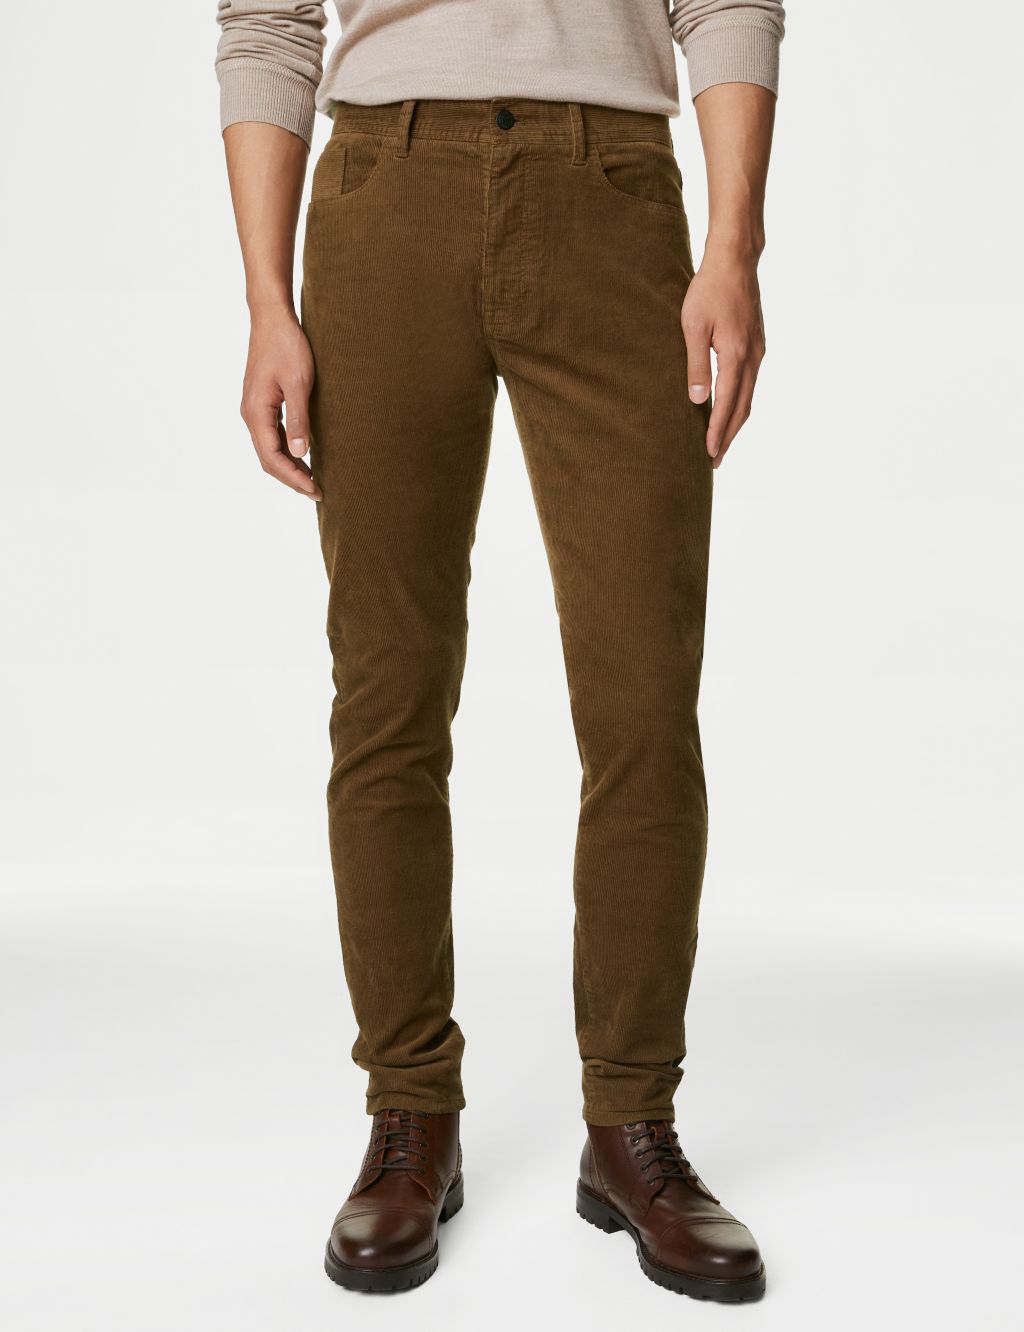 Slim Fit Corduroy 5 Pocket Trousers image 1